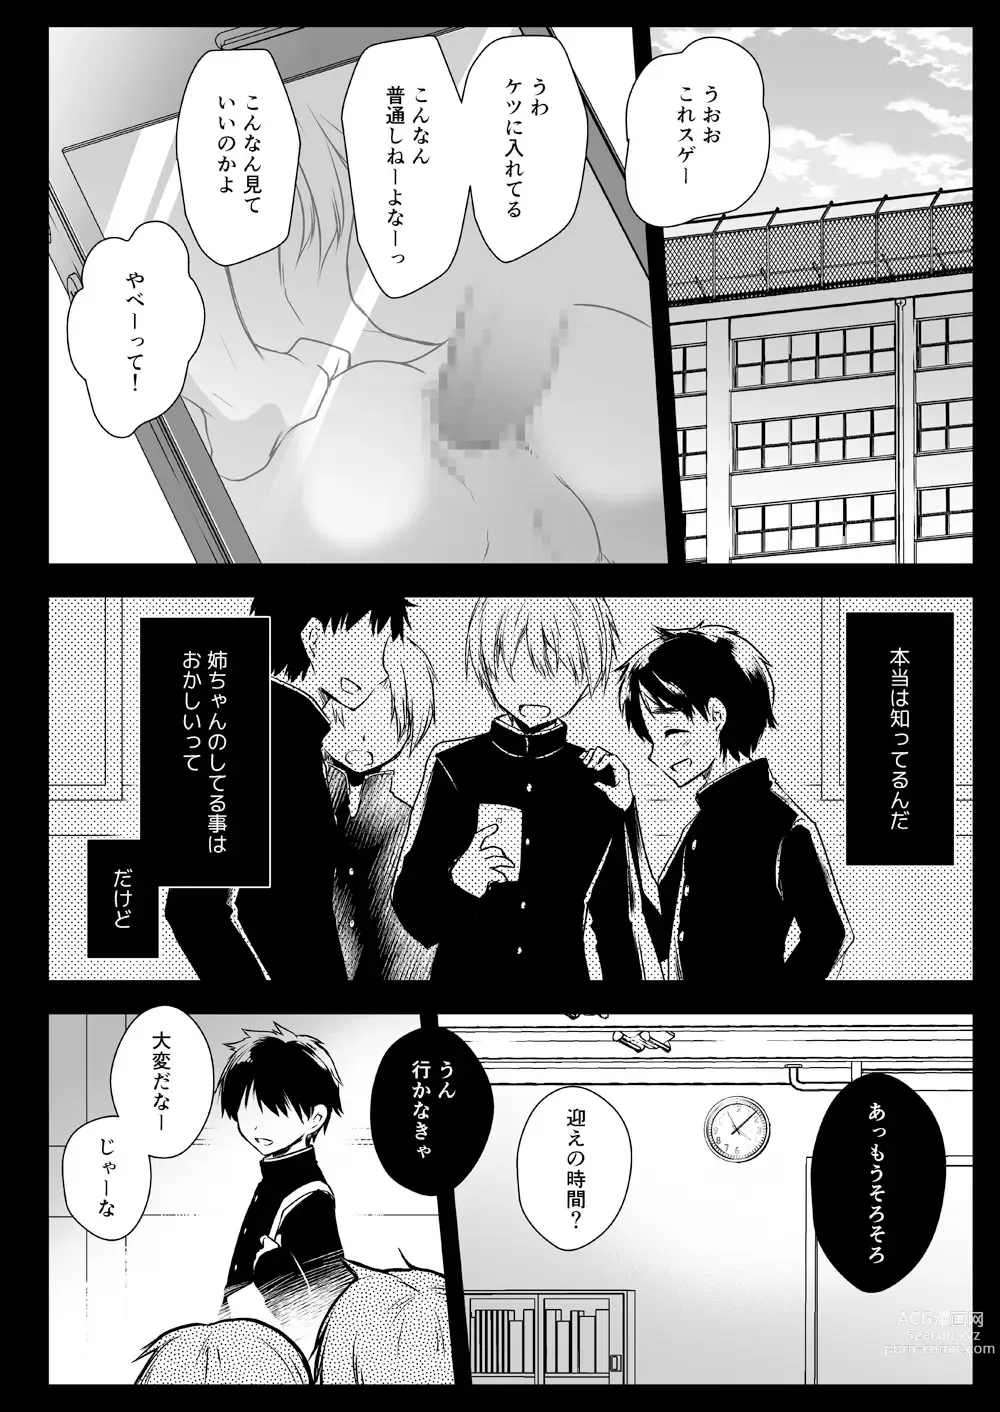 Page 27 of manga Kyou izon Kyoudai